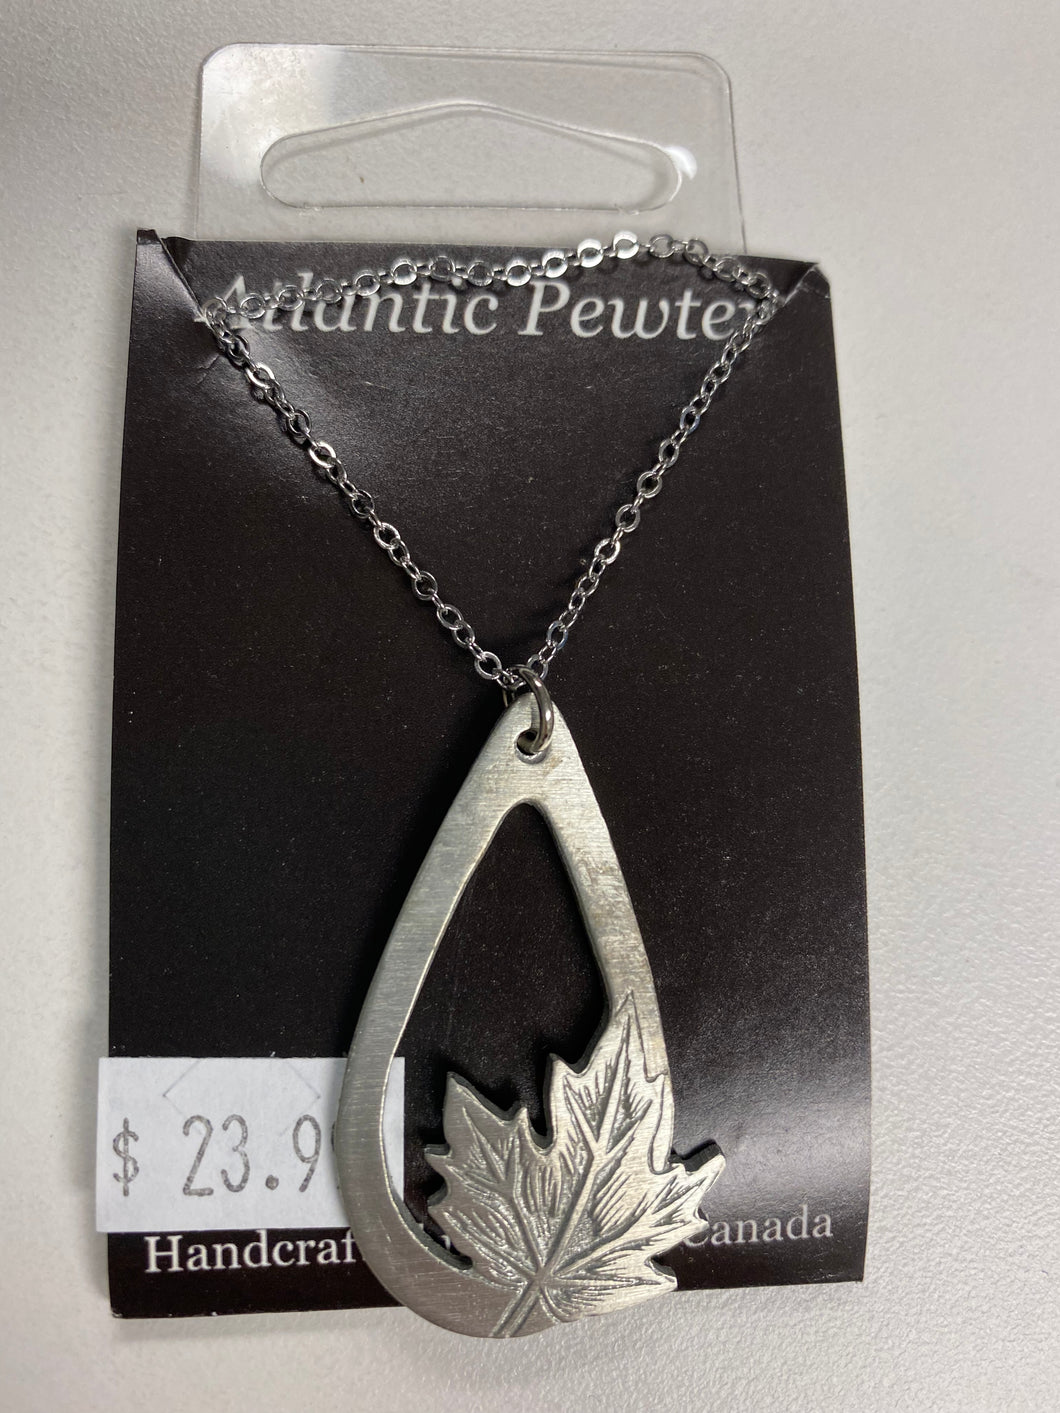 Atlantic Pewter Maple Leaf Necklace